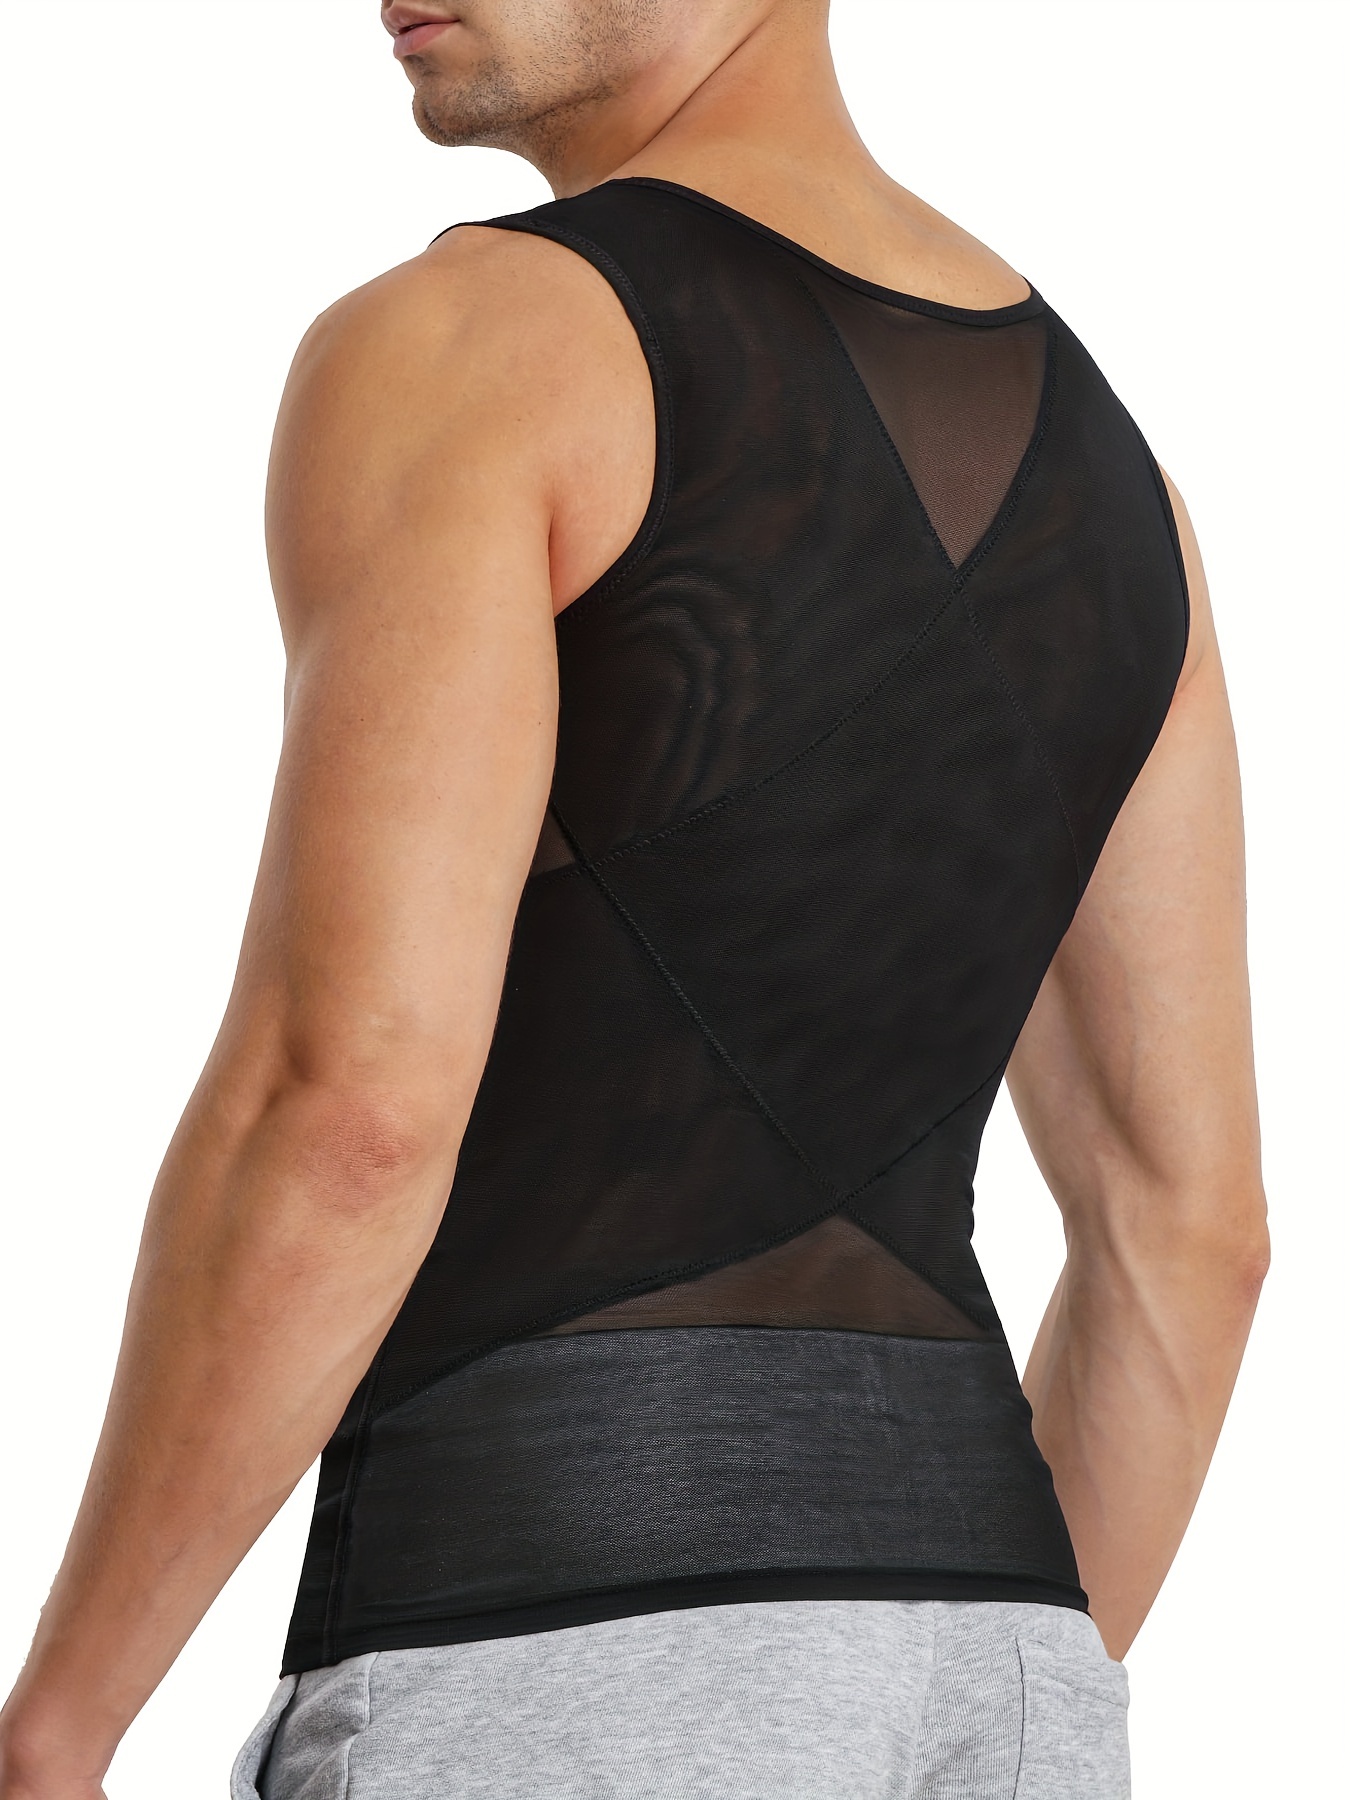 Top Sale Custom Print Best Slimming Shirt Body Shaper Vest